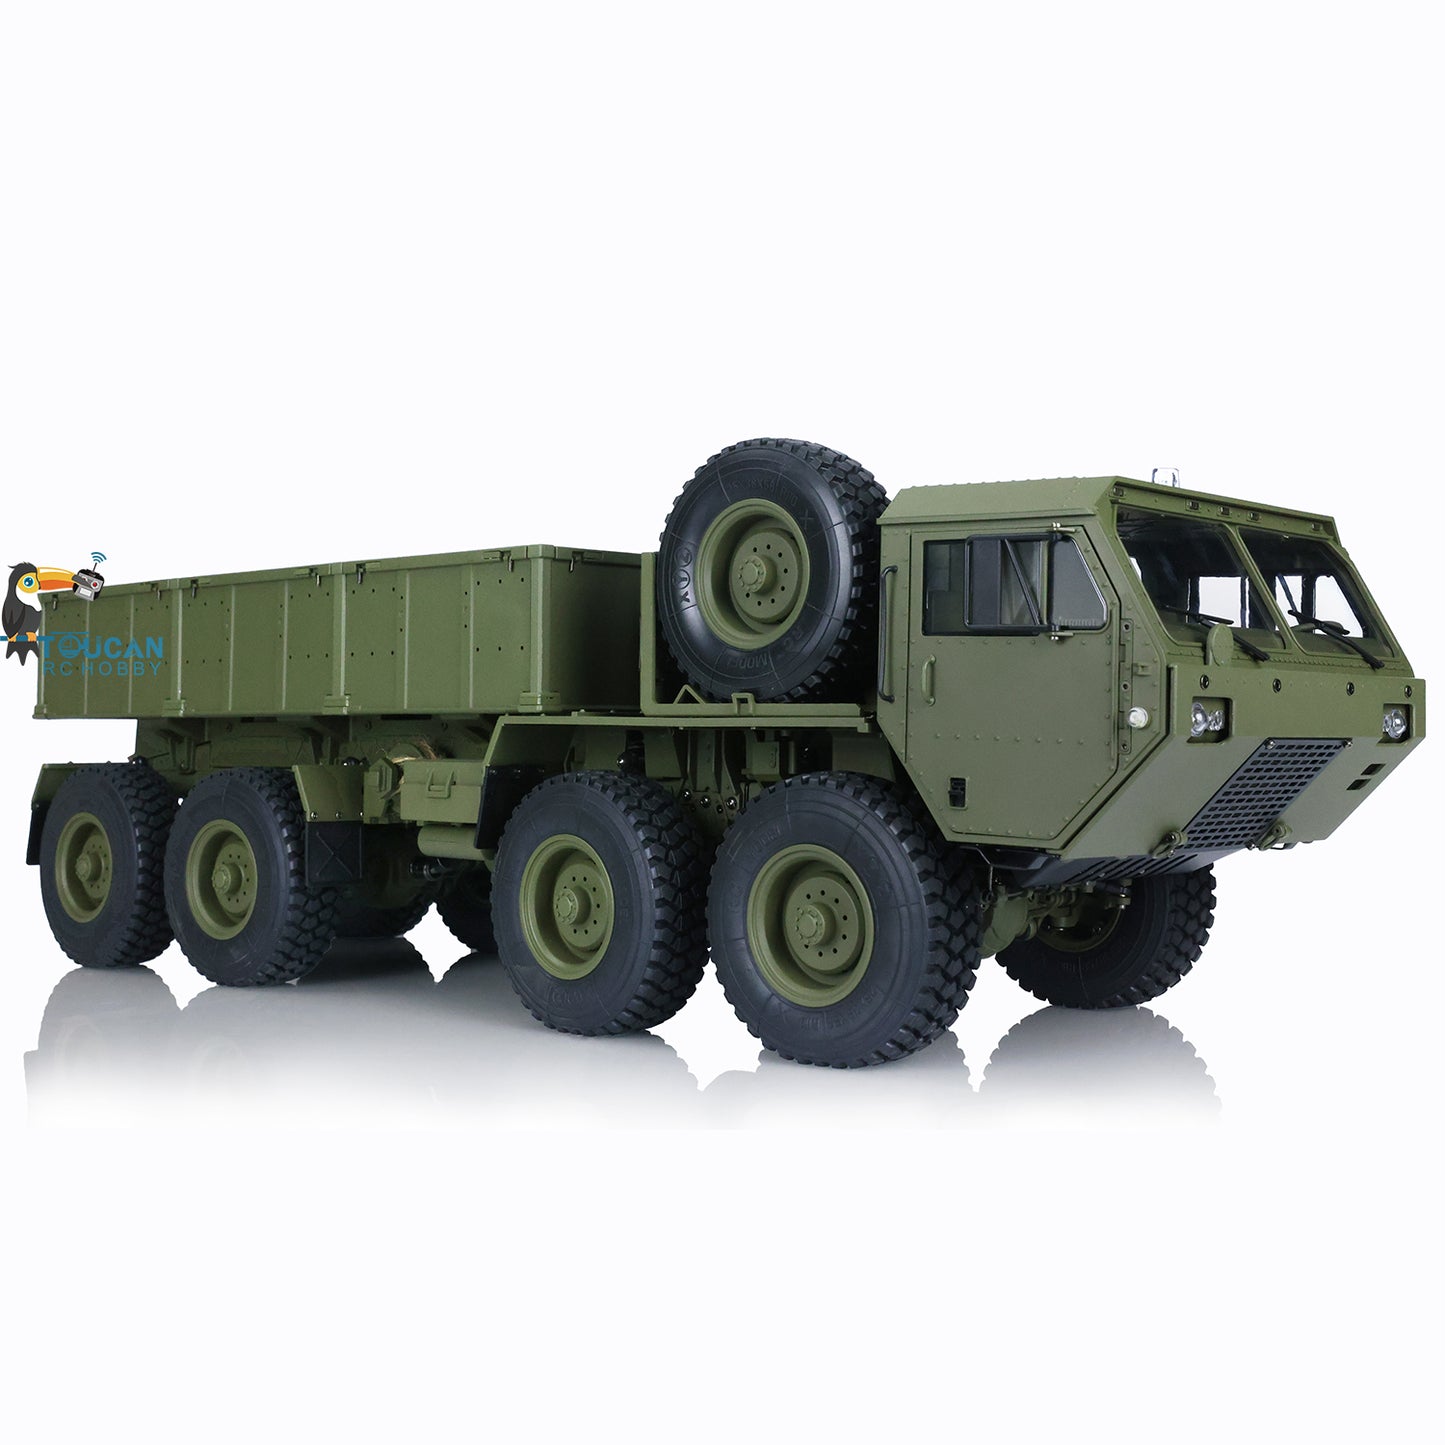 HG 1/12 RC US Military Truck P801 8*8 Radio System Alexs Drive Shaft Servo Motor Wheel Remote Control Vehicles Cars Model